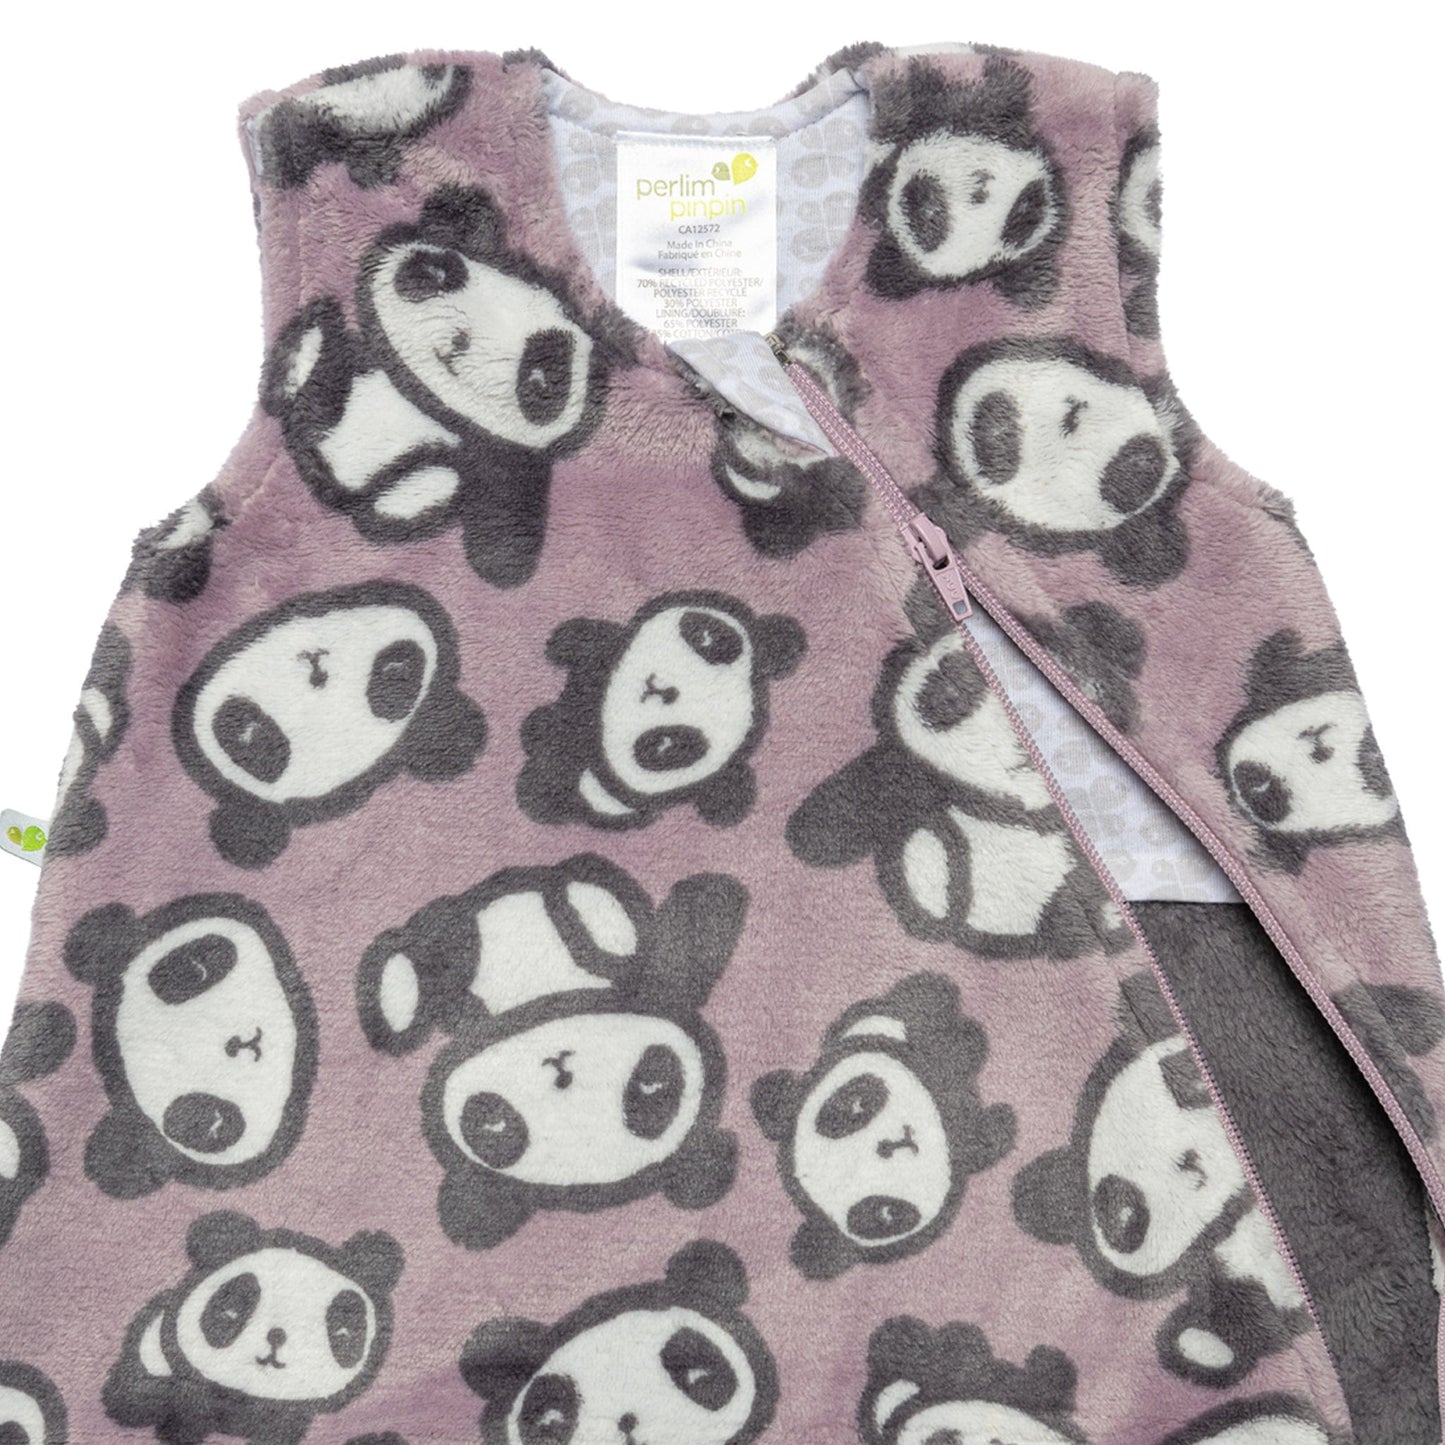 Plush sleep sack - Pandas (1.5 togs)